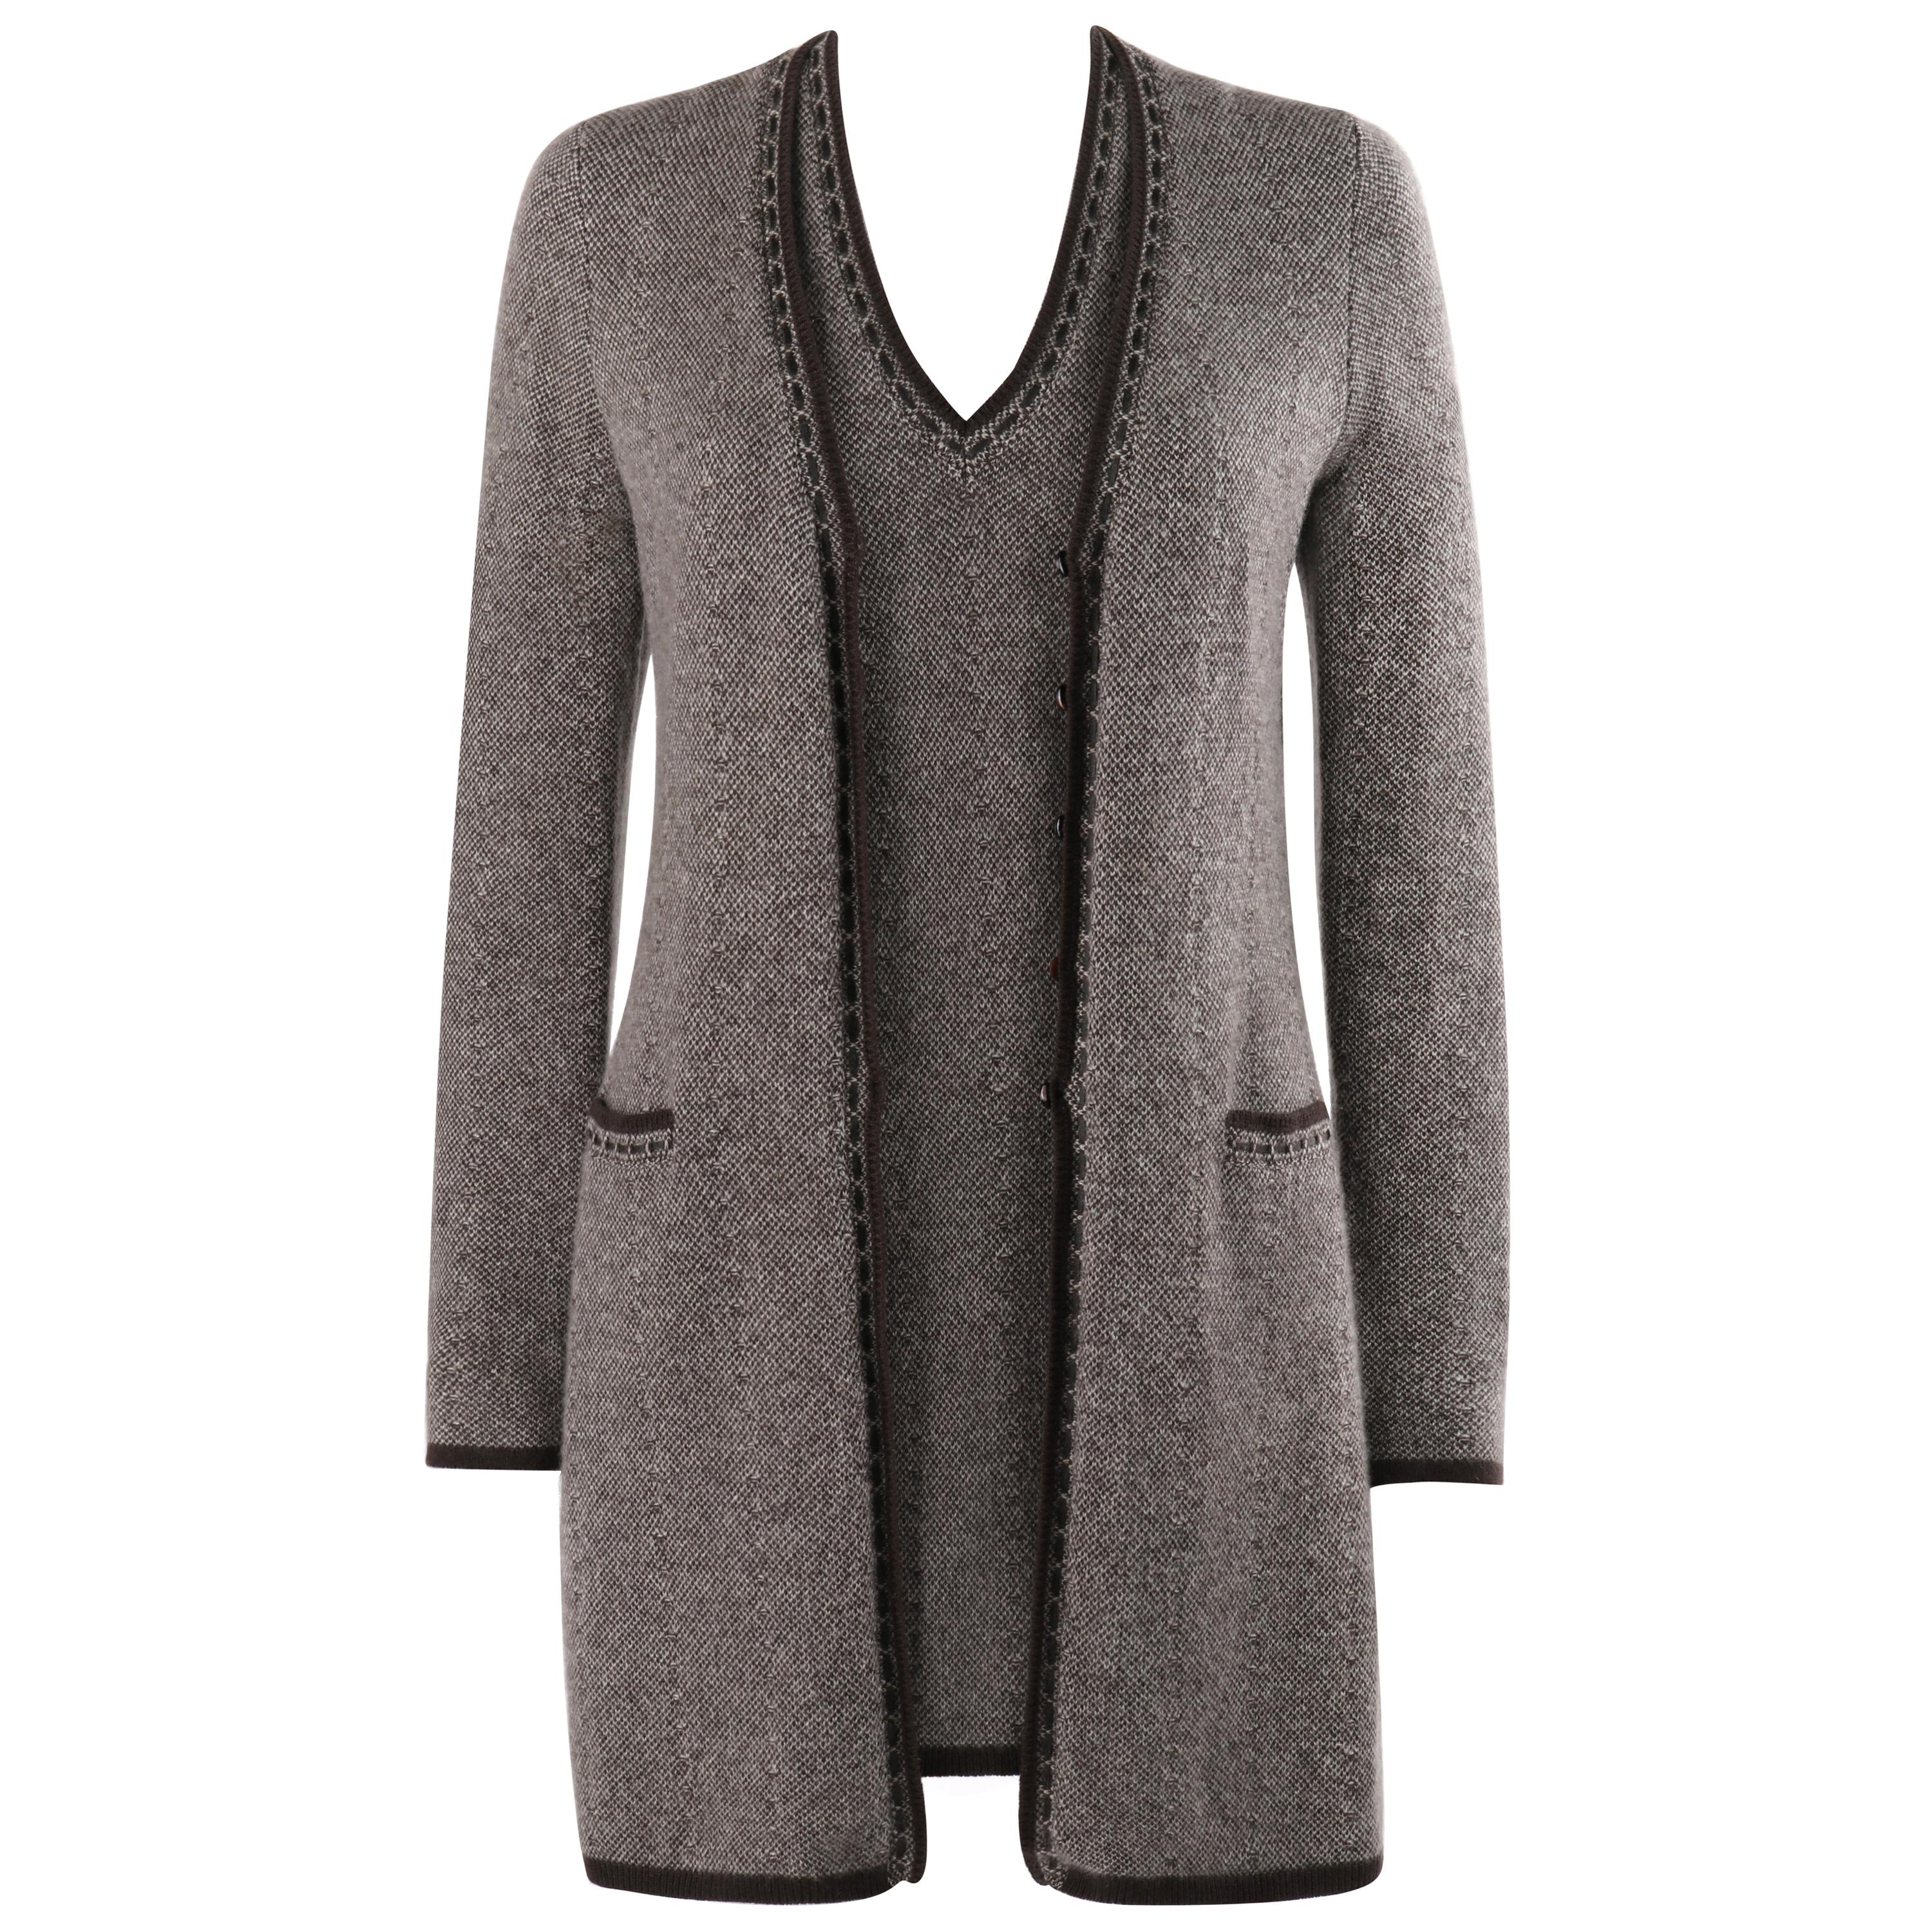 LORO PIANA Brown Cashmere Leather Tweed Knit Cardigan Dress Sweater Twin Set 44